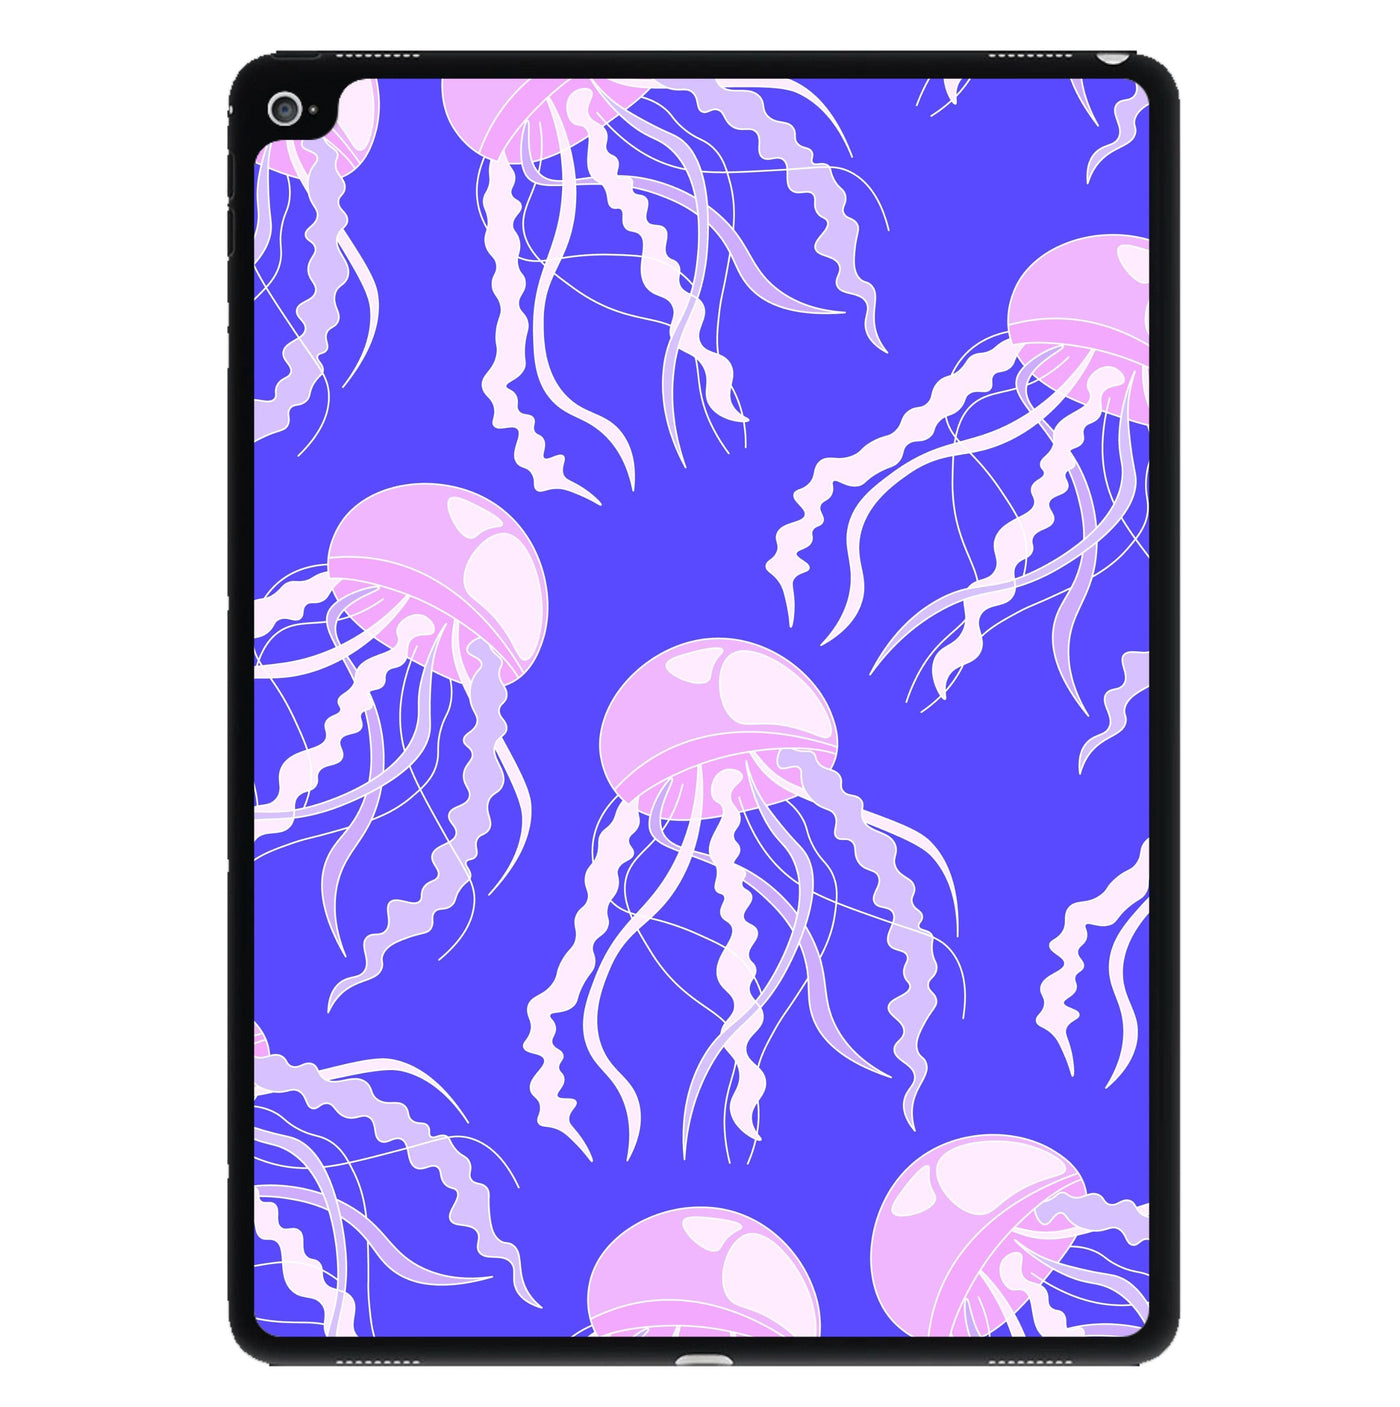 Jellyfish Pattern - Sealife iPad Case